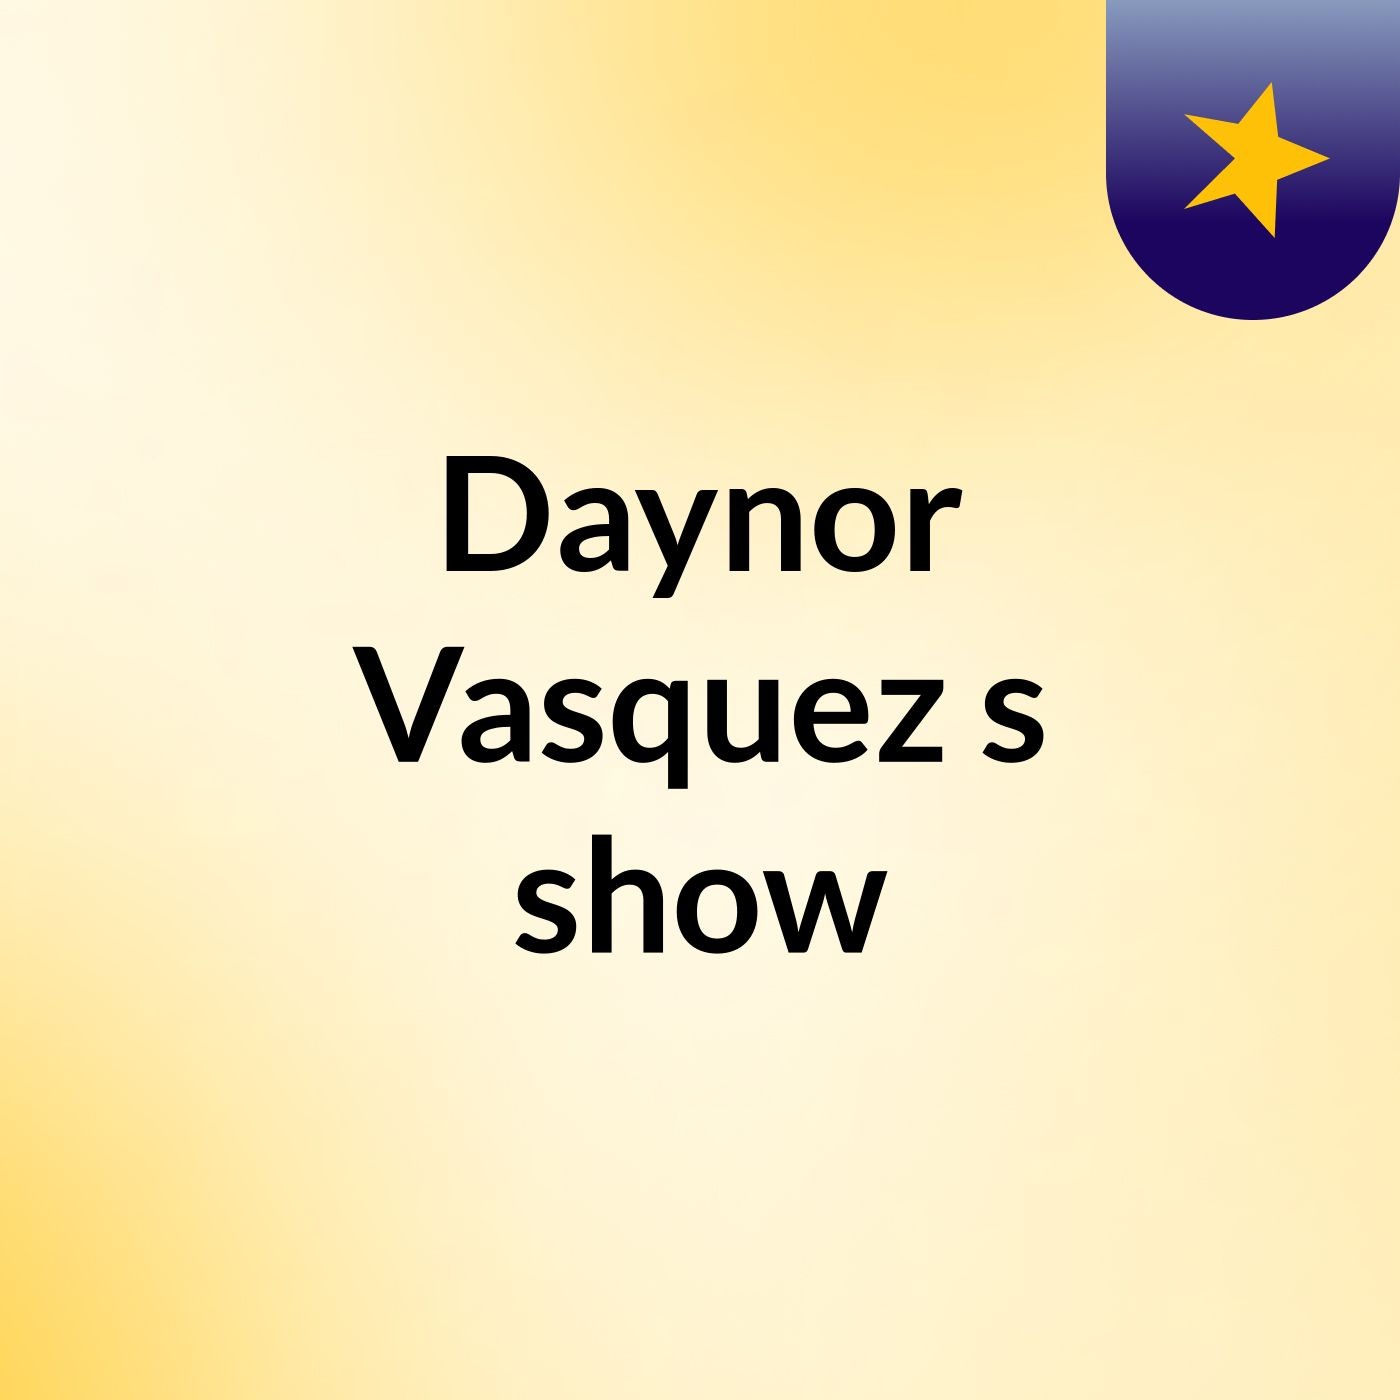 Daynor Vasquez's show